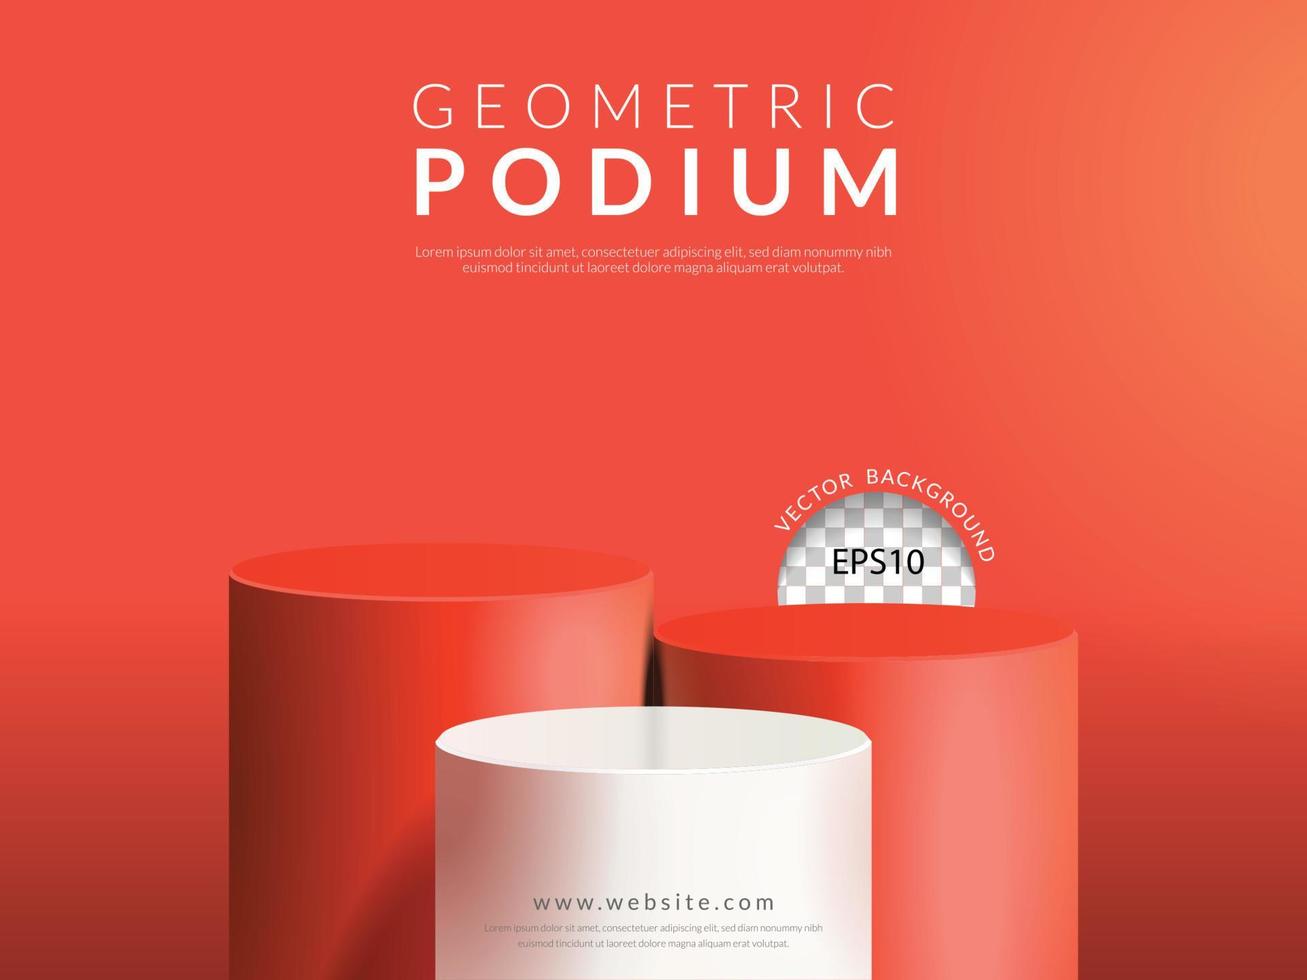 geometrisk produkt visa begrepp, tre steg vit och orange cylinder podium på orange bakgrund, vektor illustration